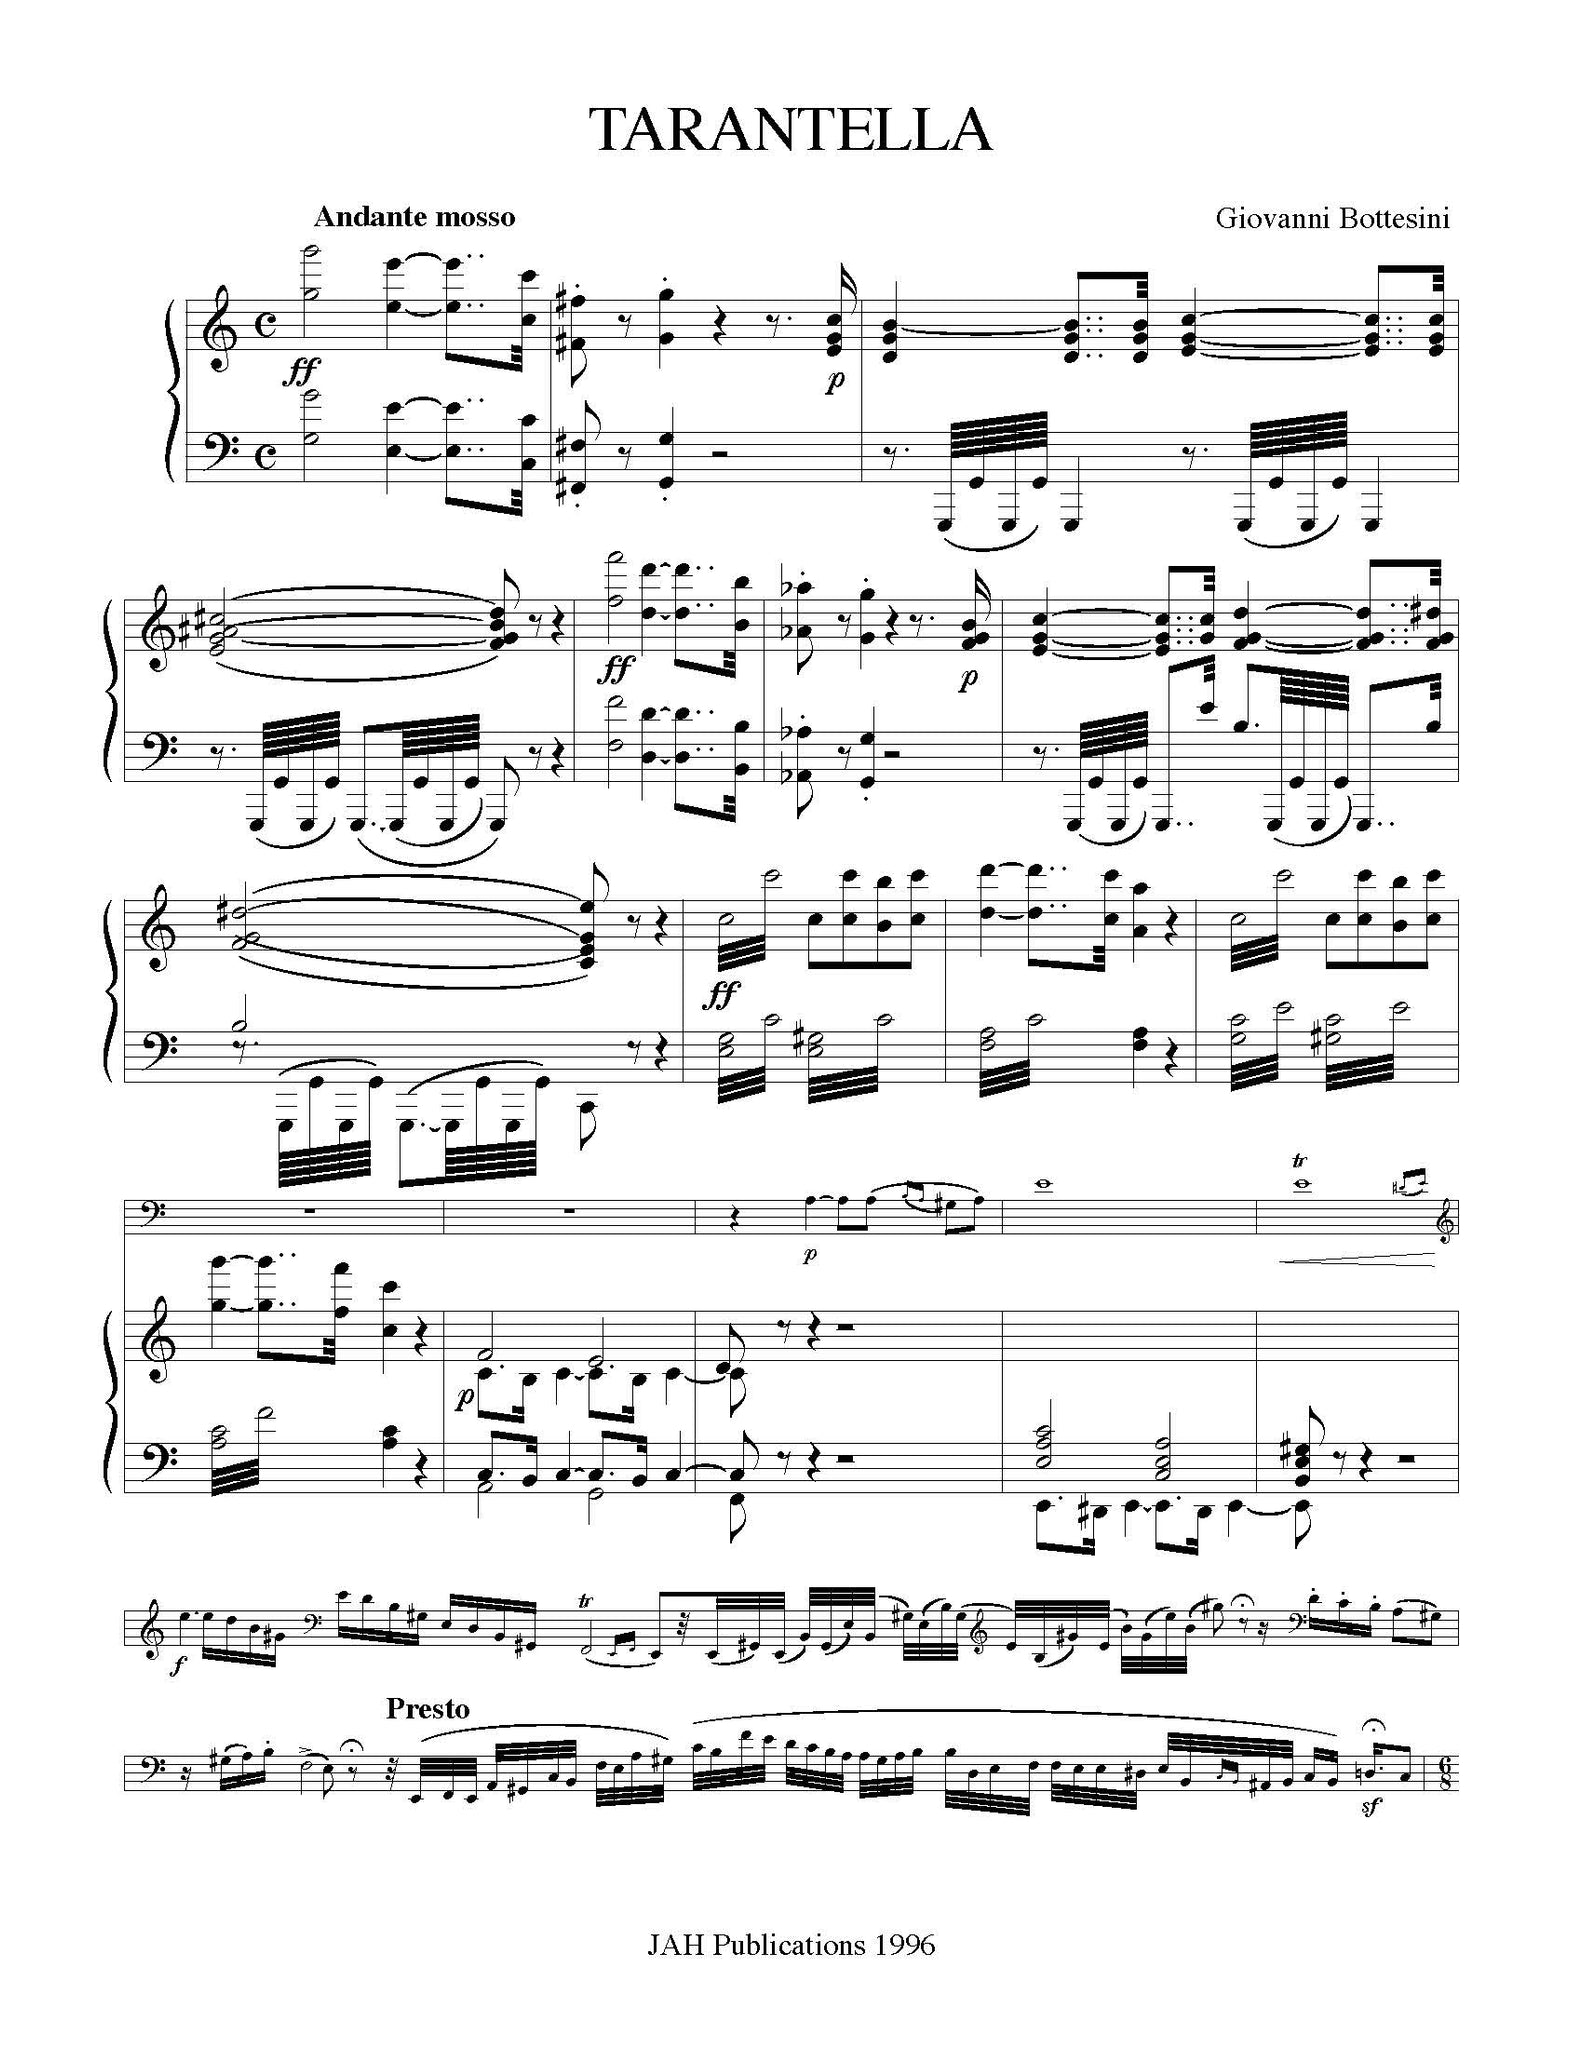 Bottesini Tarantella a minor/A Major solo tuning page 1